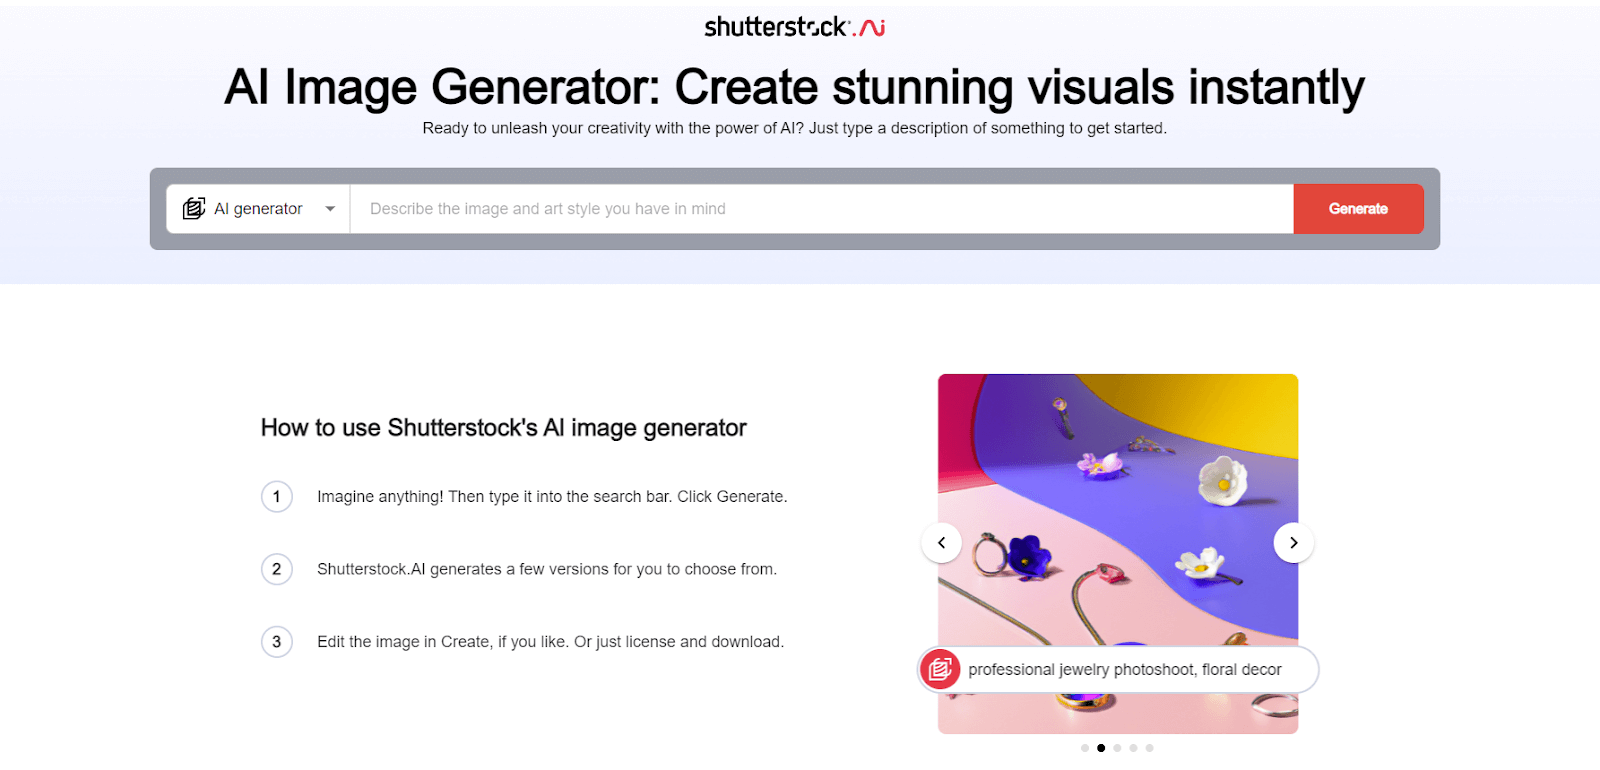 ai image generation, ai image generator, best ai image generation, best ai image generator, best image generation, image generation